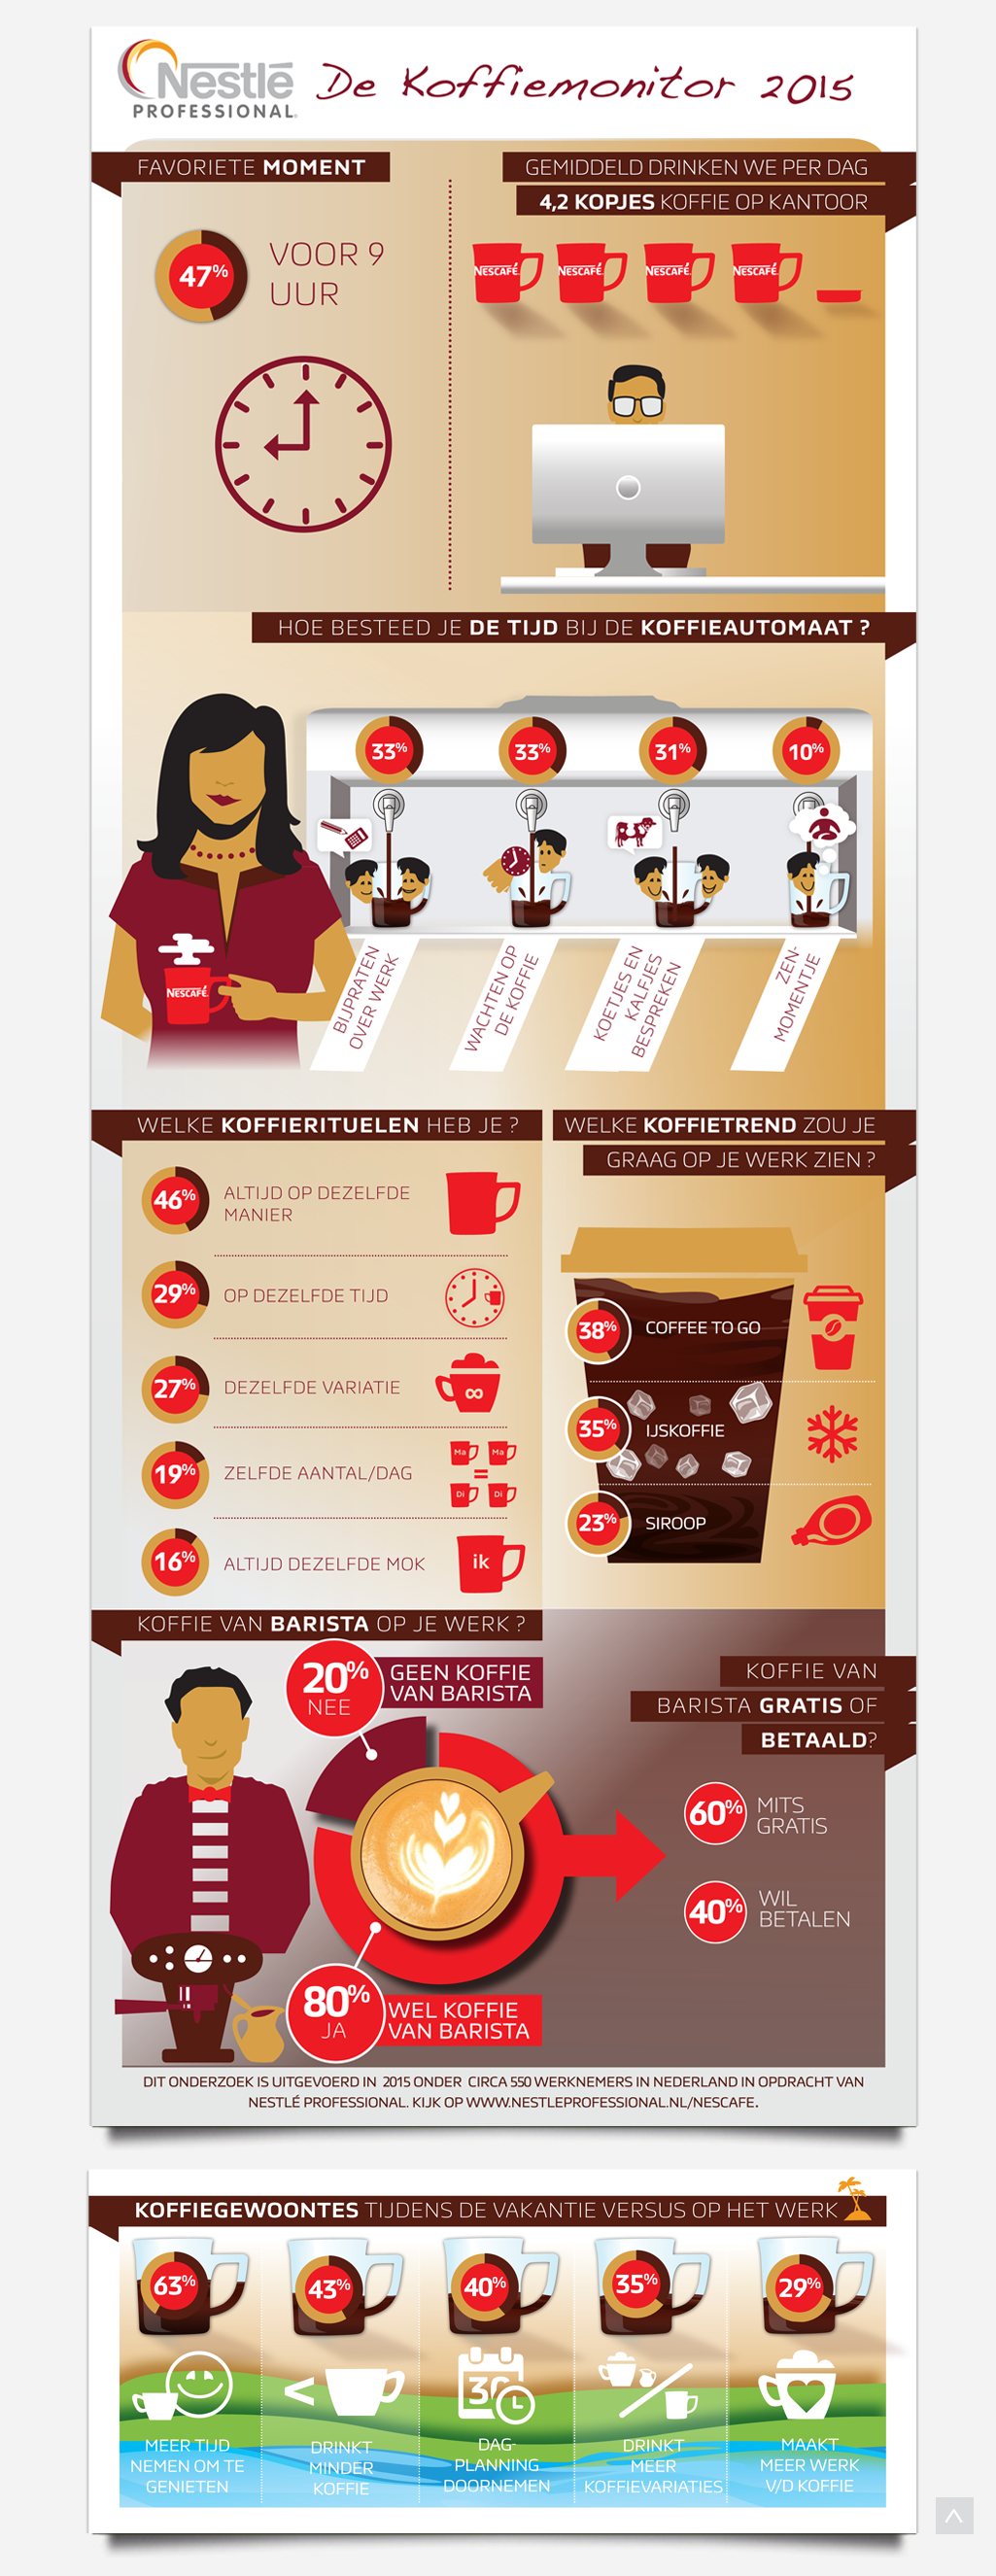 Nestlé Professional  Koffiemonitor 2015